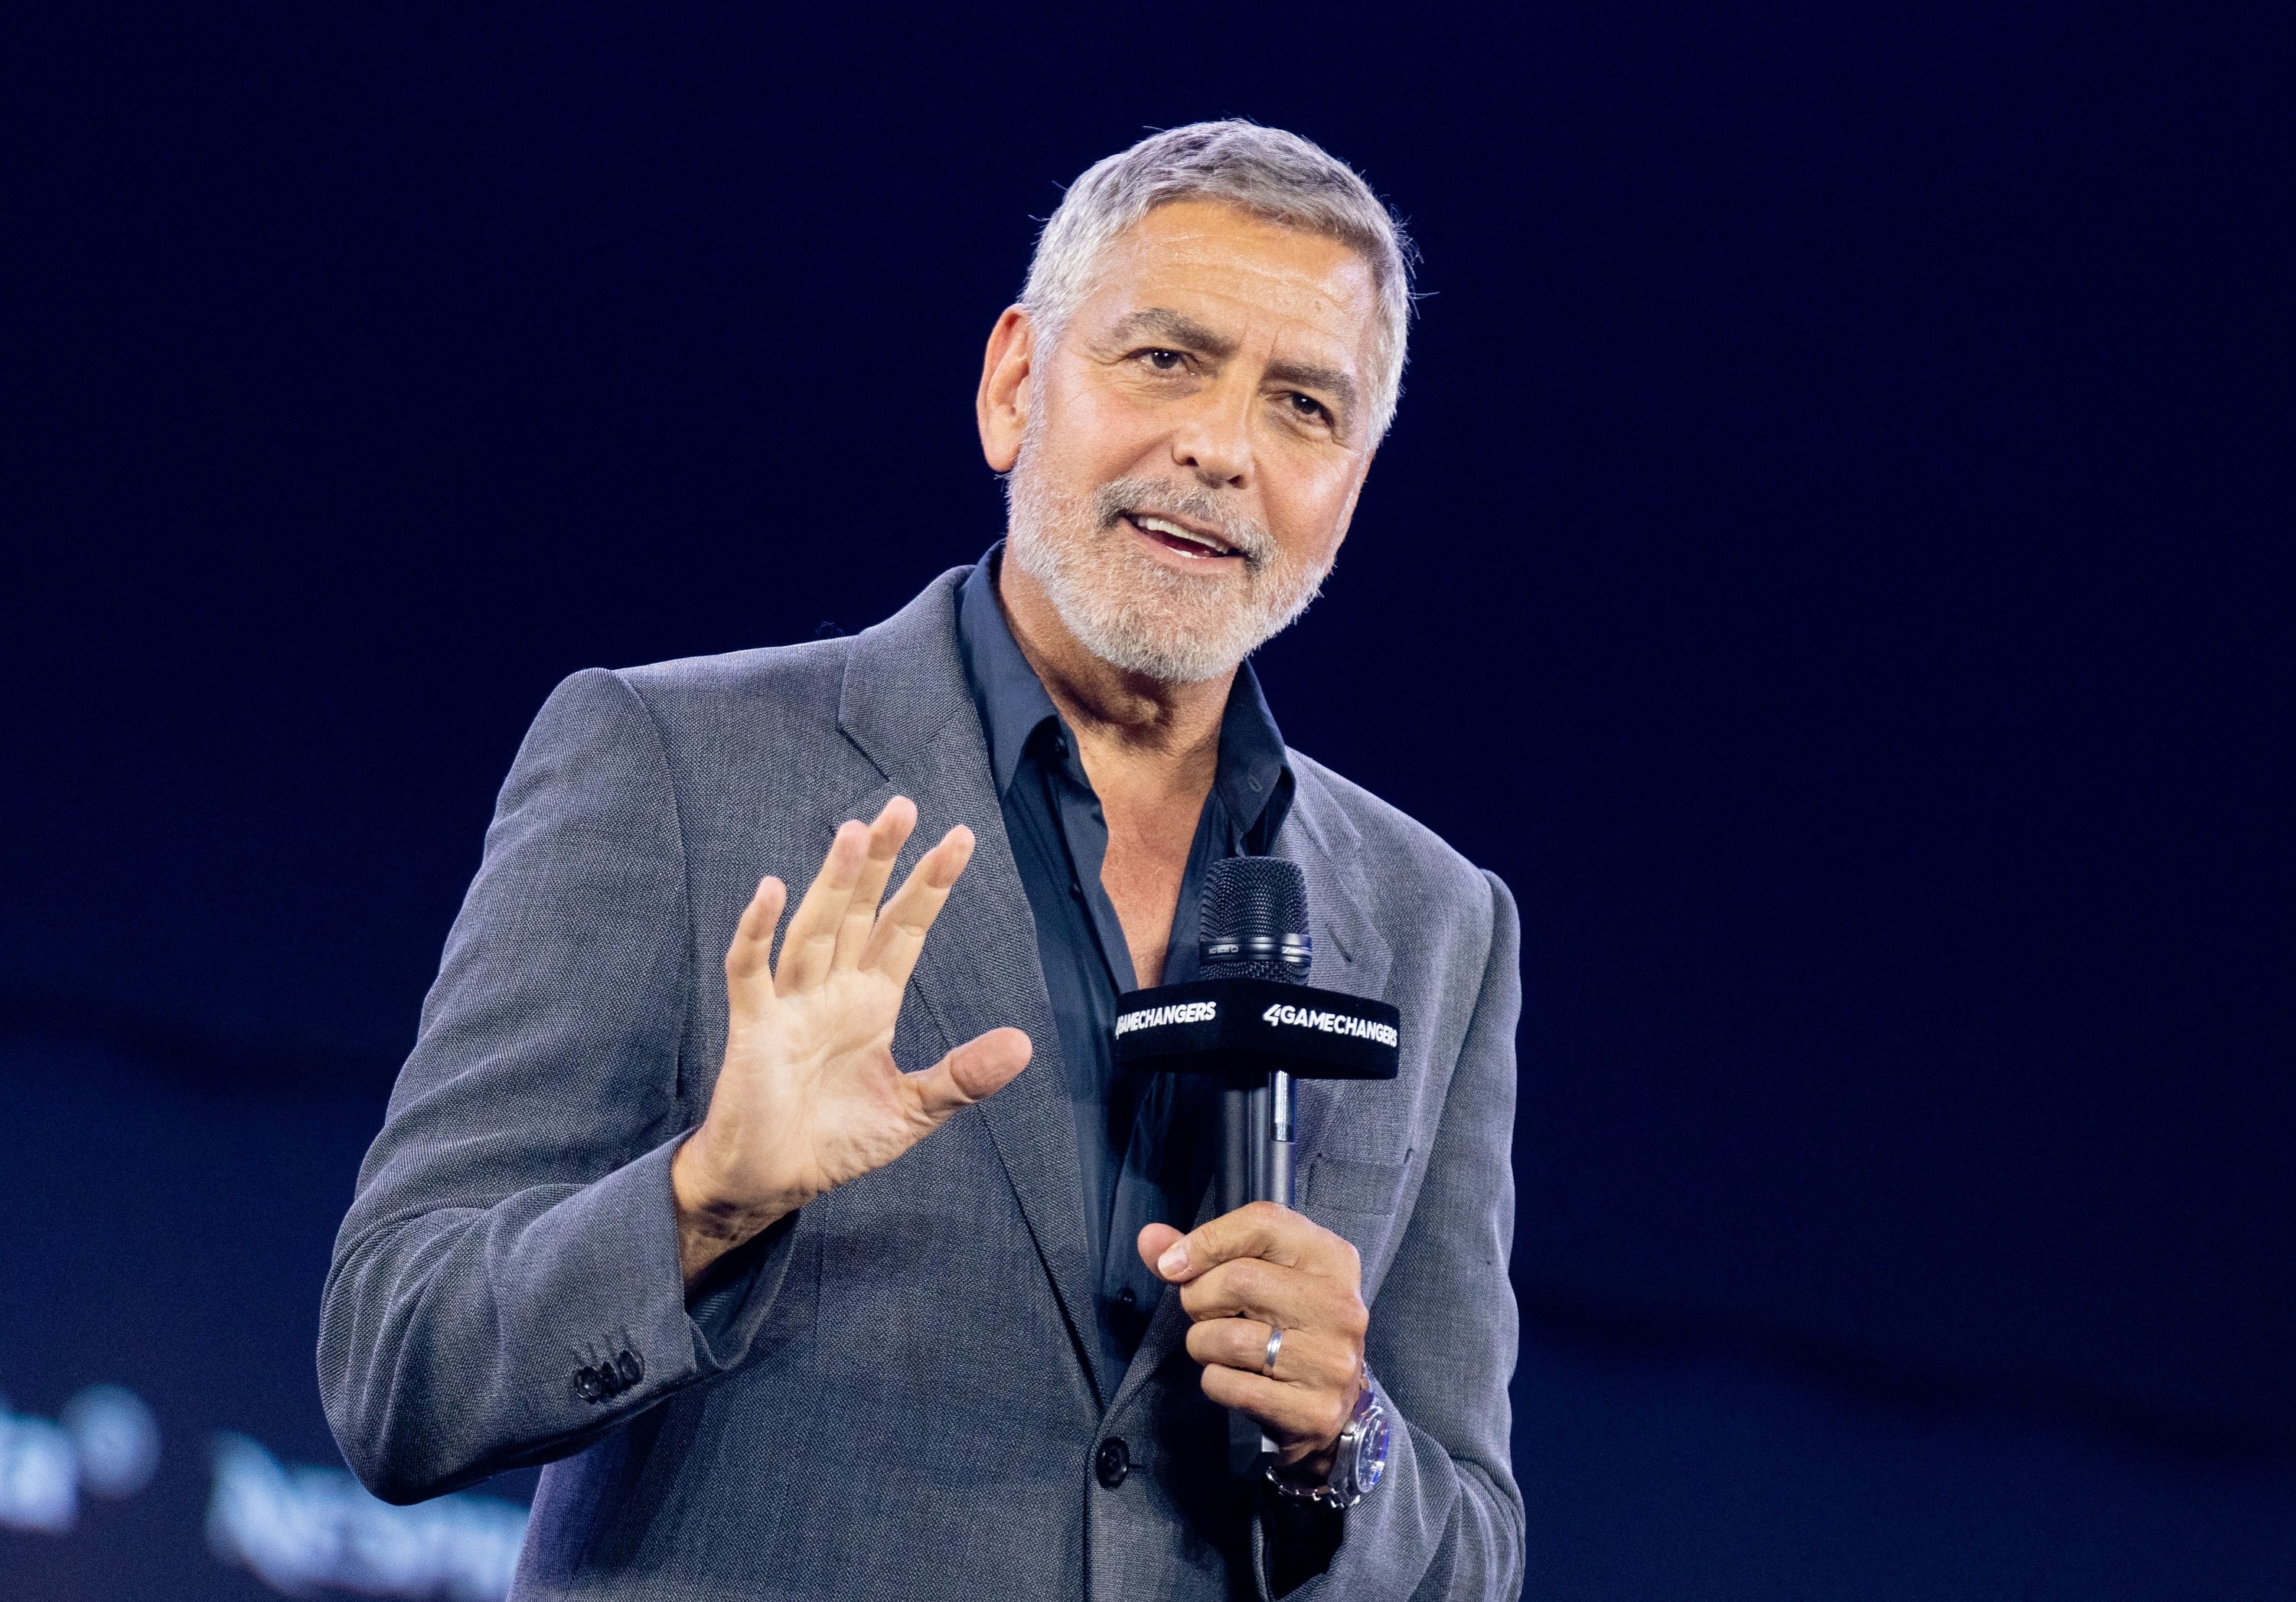 Clooney speaking